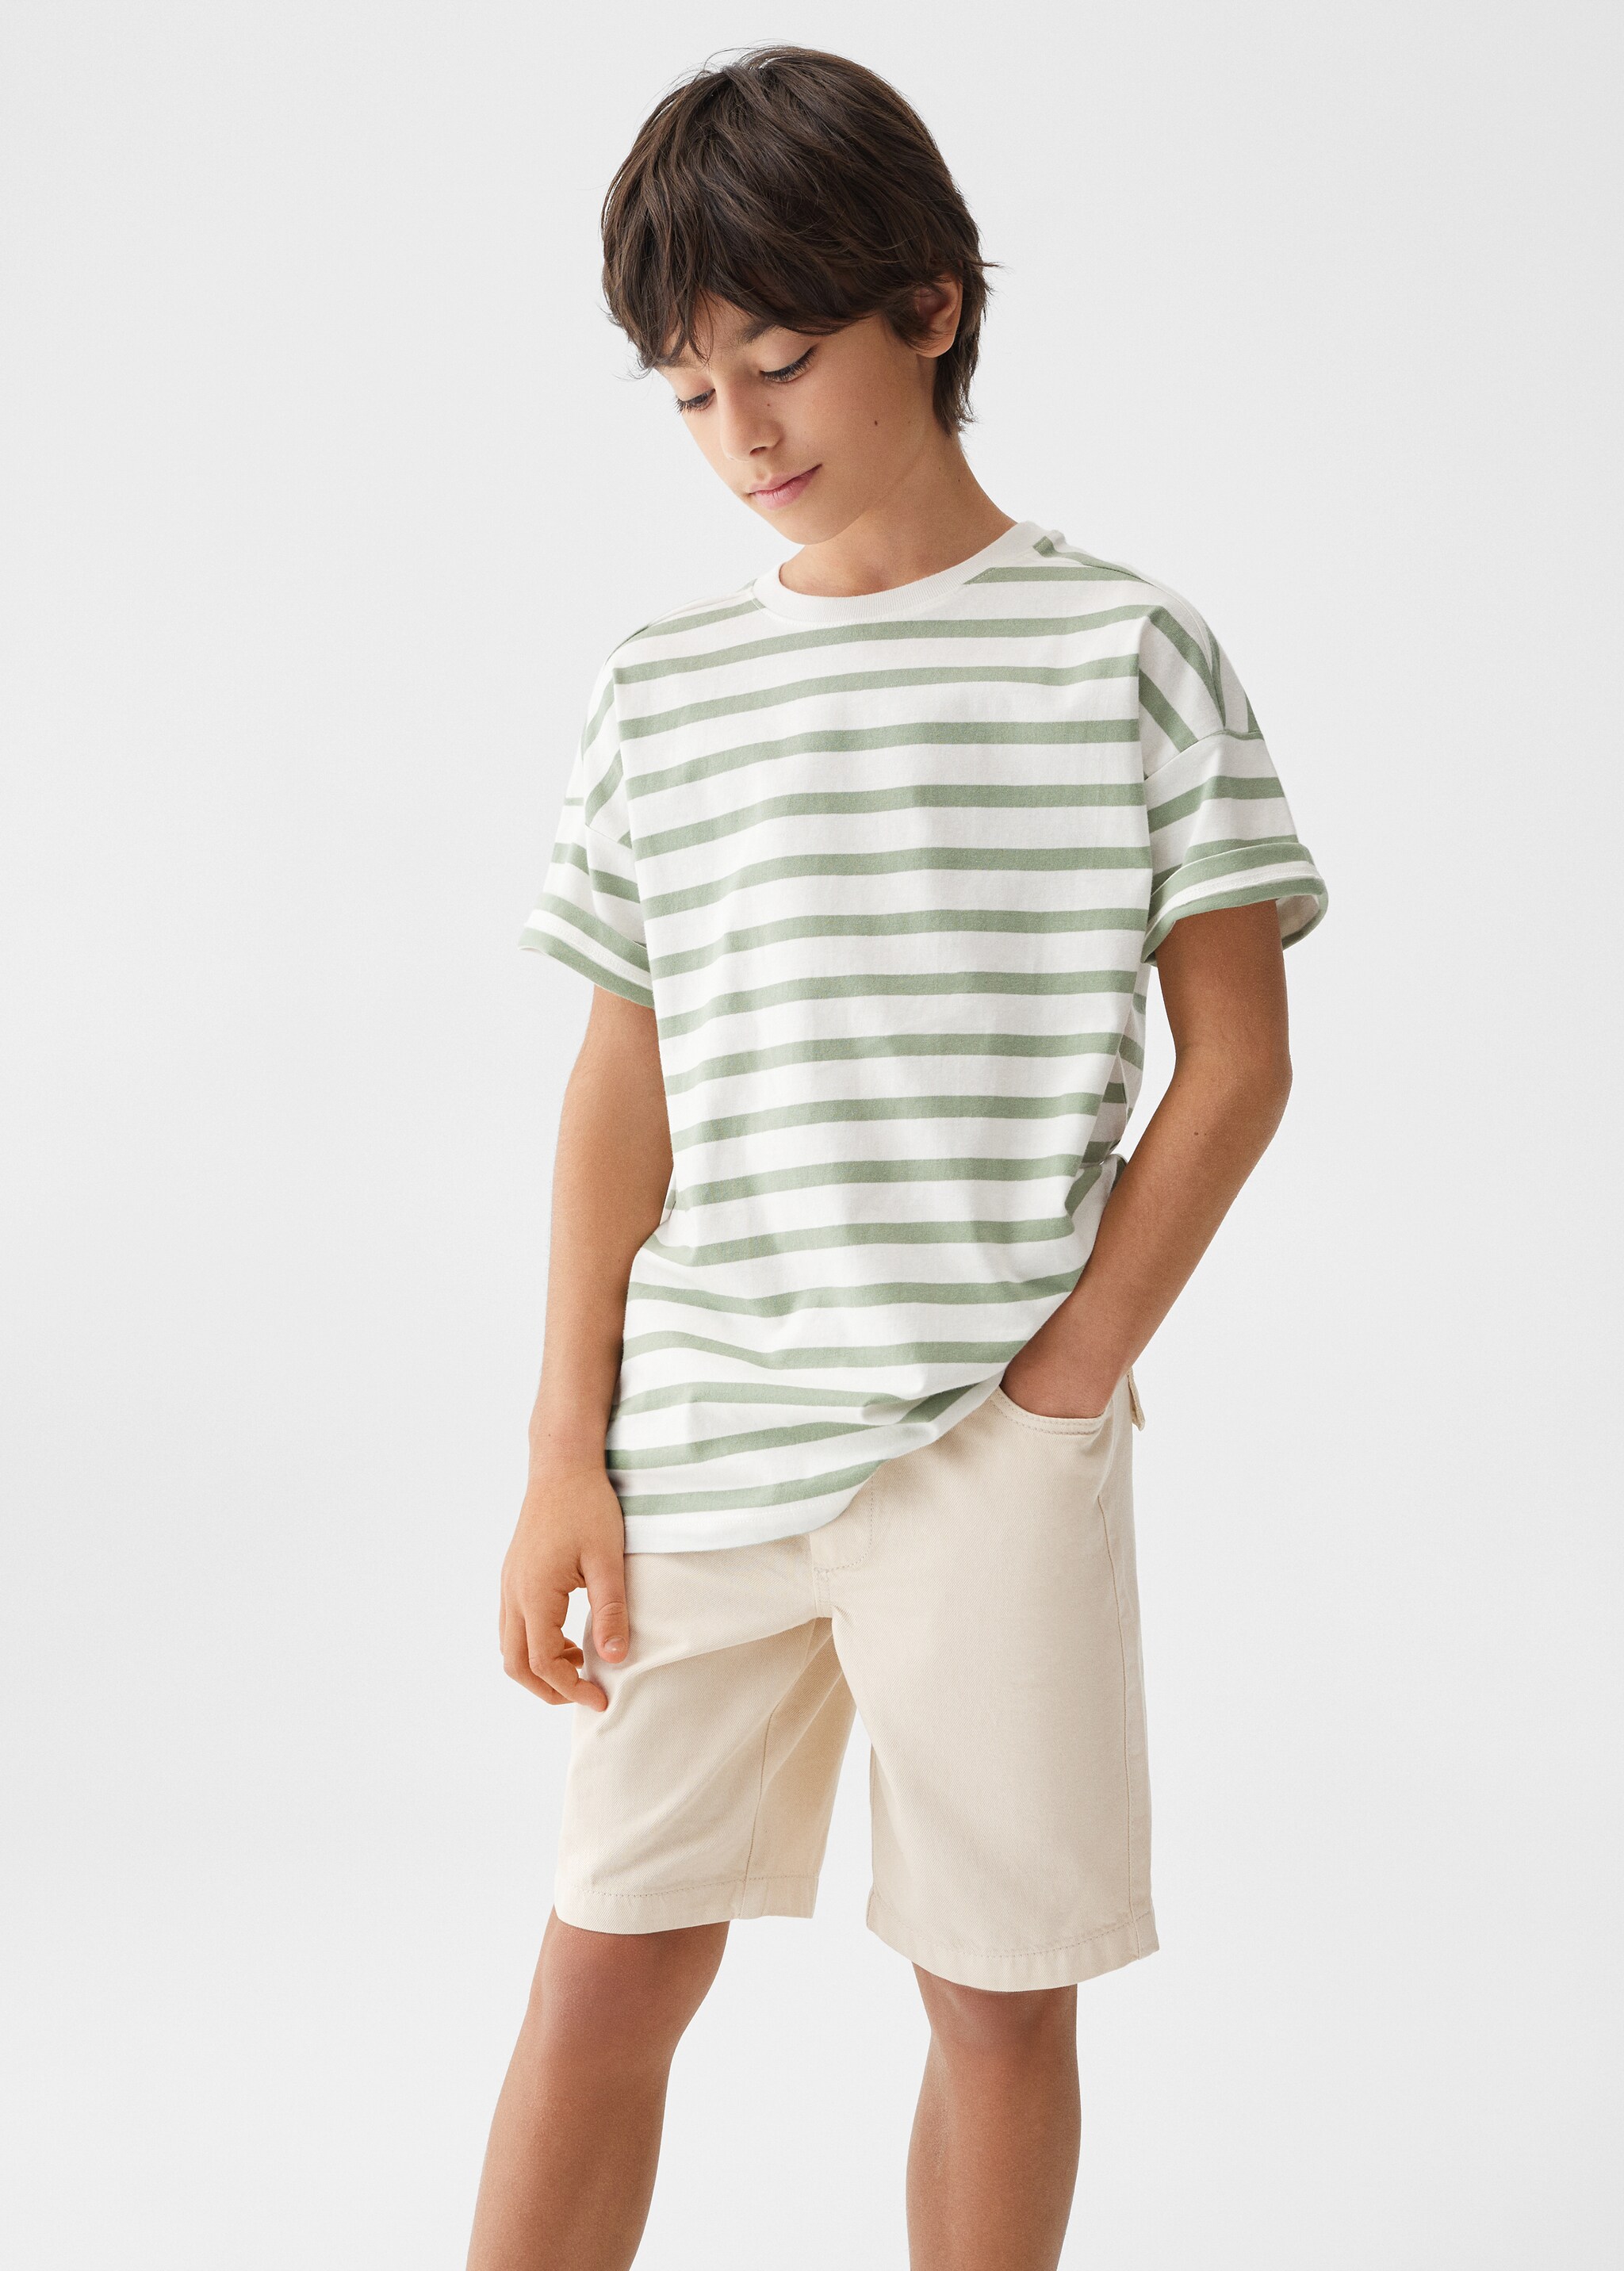 Cotton shorts with elastic waist - Medium plane